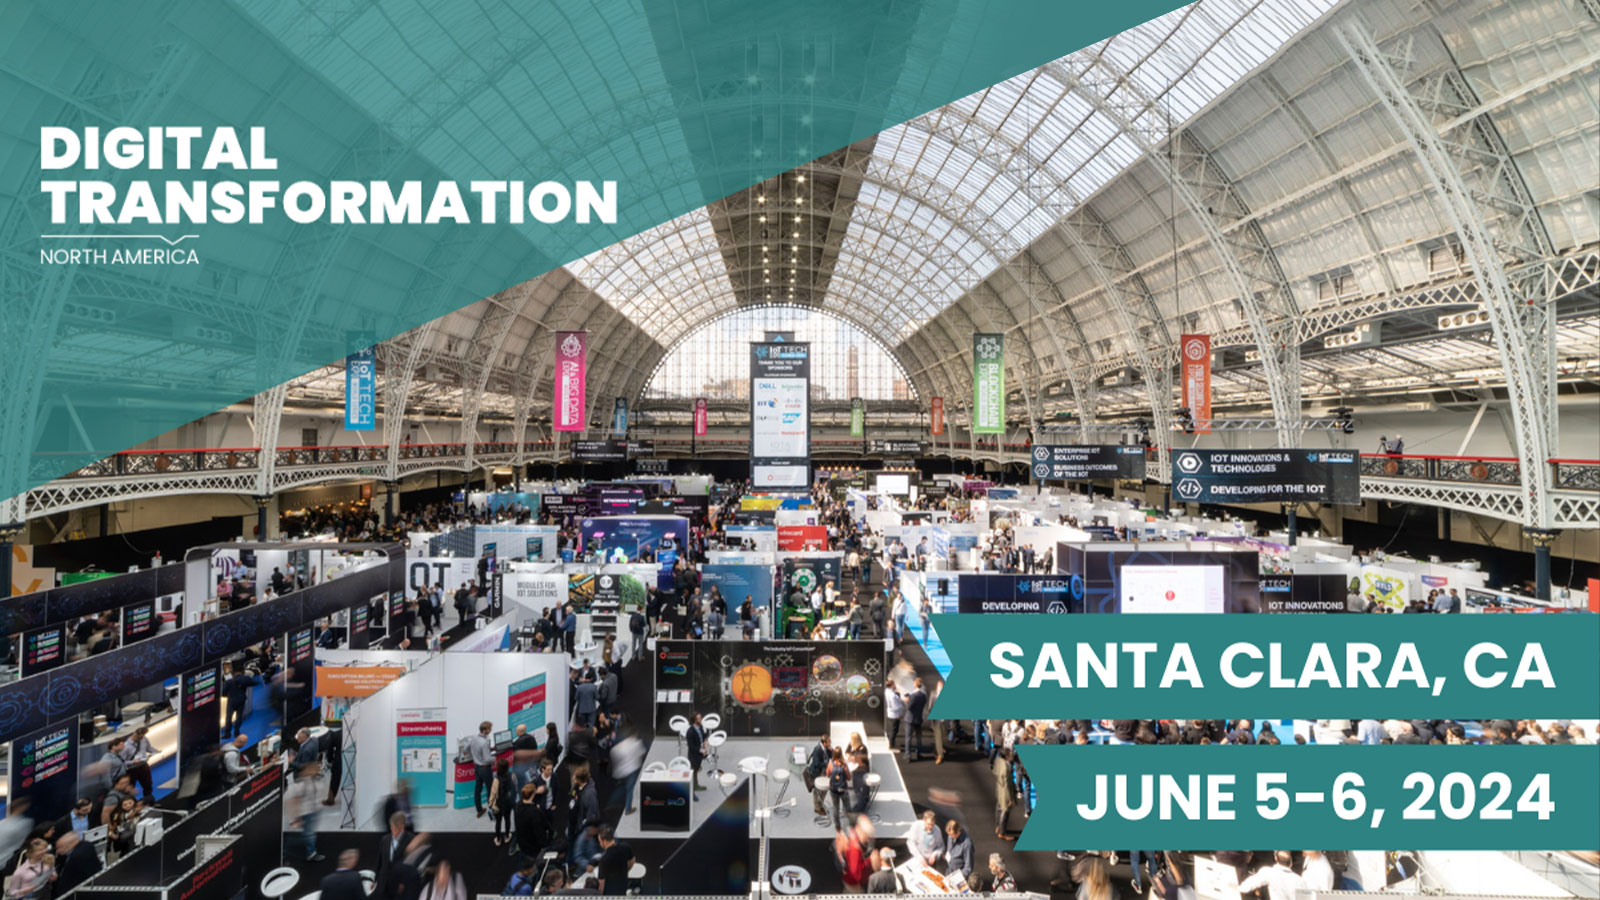 Digital Transformation Week Is Returning to Santa Clara This Summer